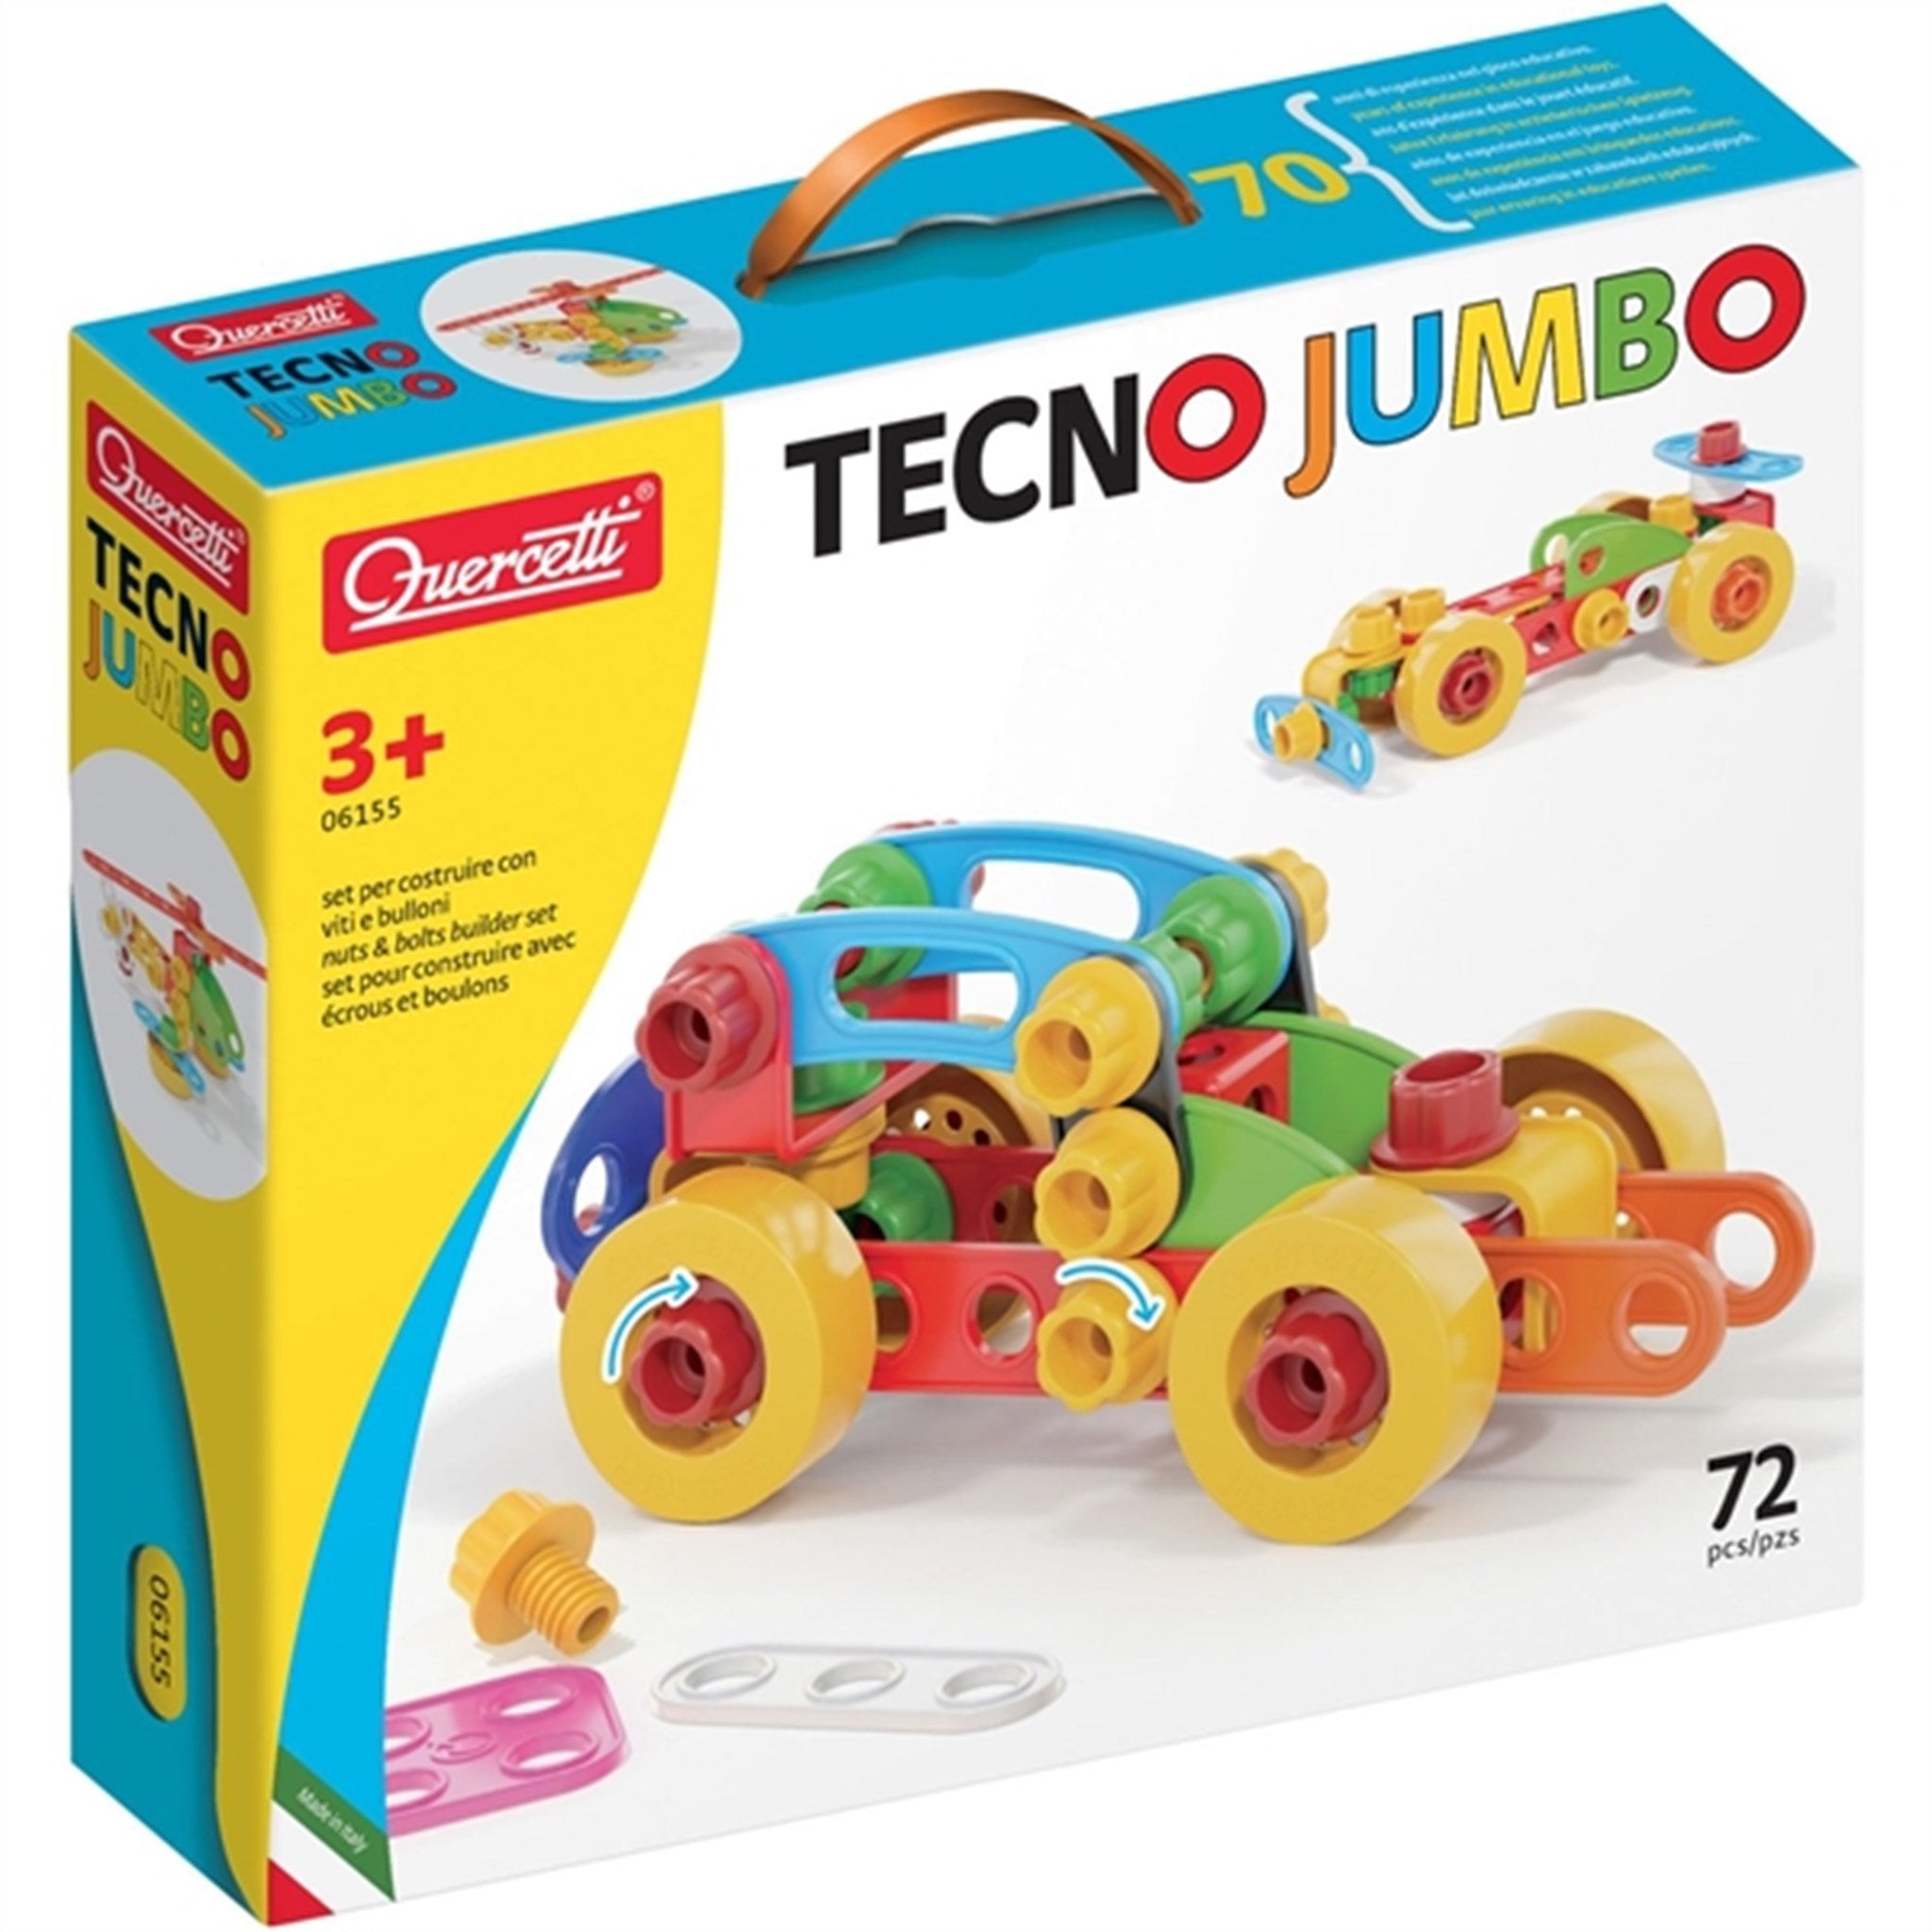 Quercetti Tecno Jumbo 拼装套装 - 促进创造力和技术理解